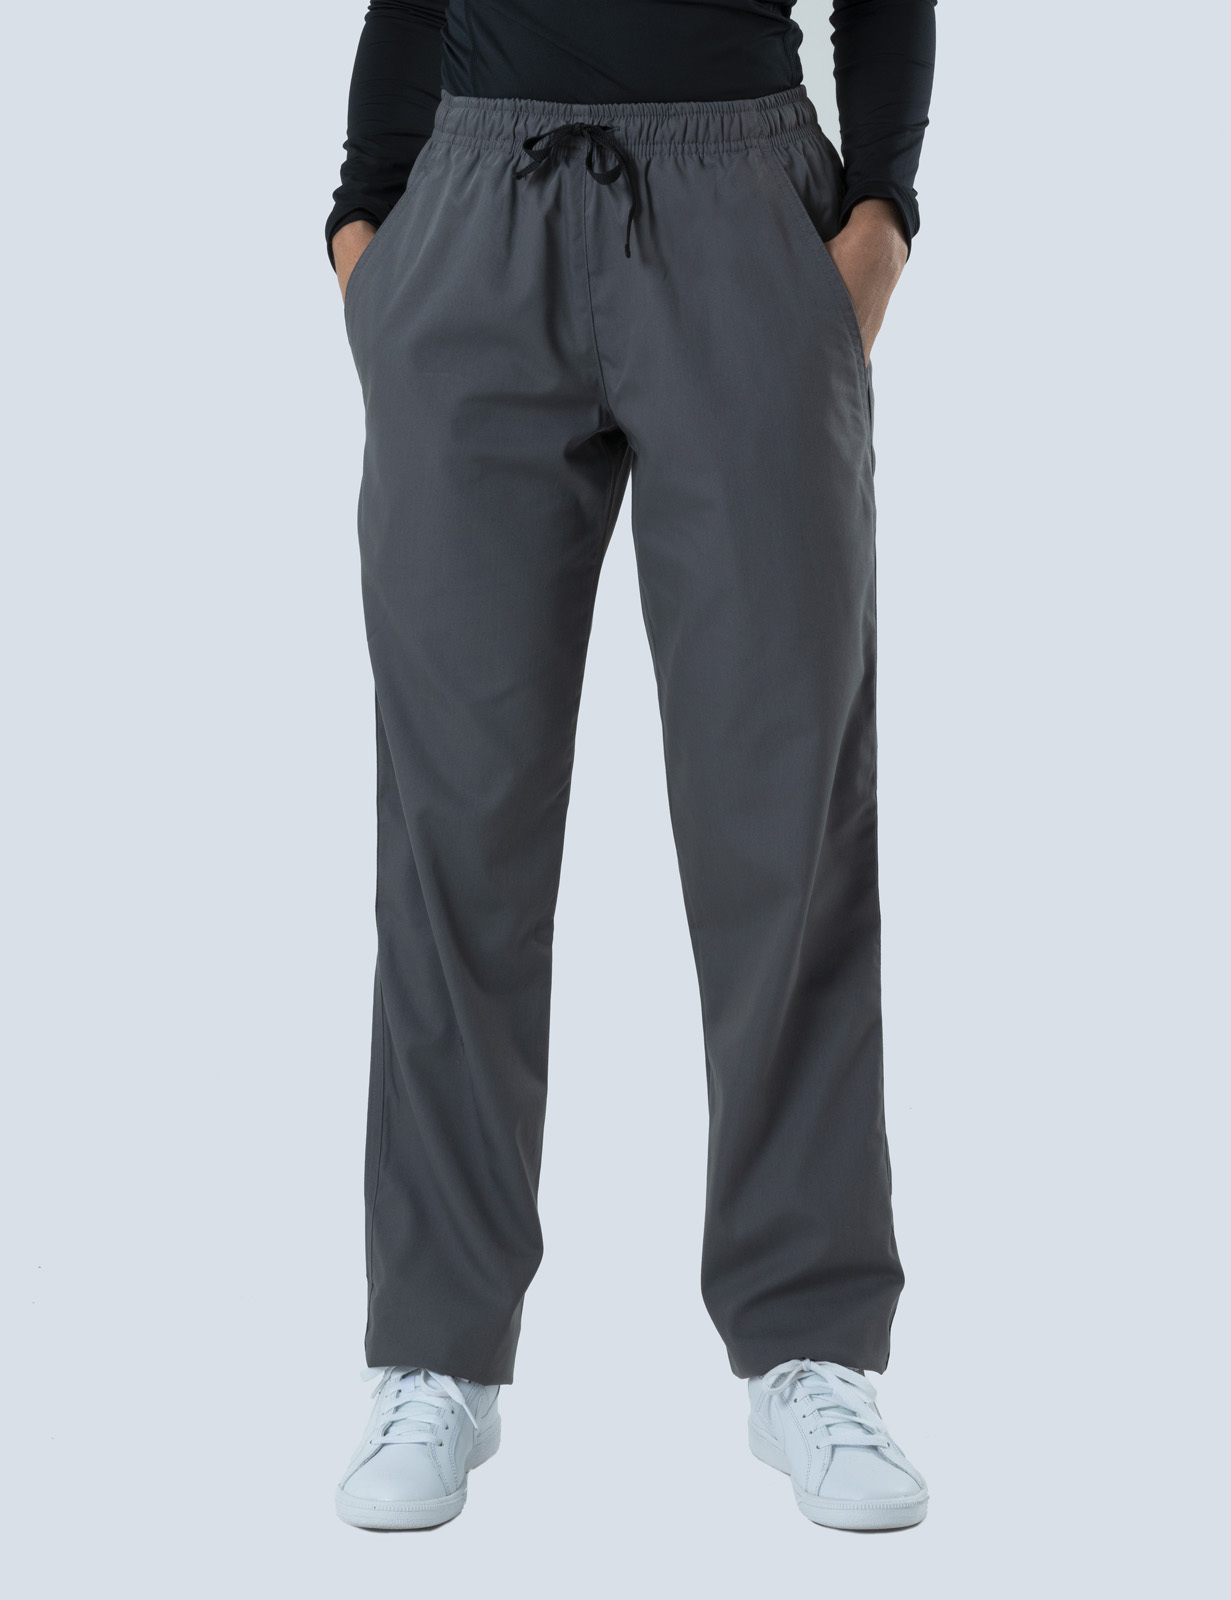 Women's Regular Cut Pants - Steel Grey - X Small